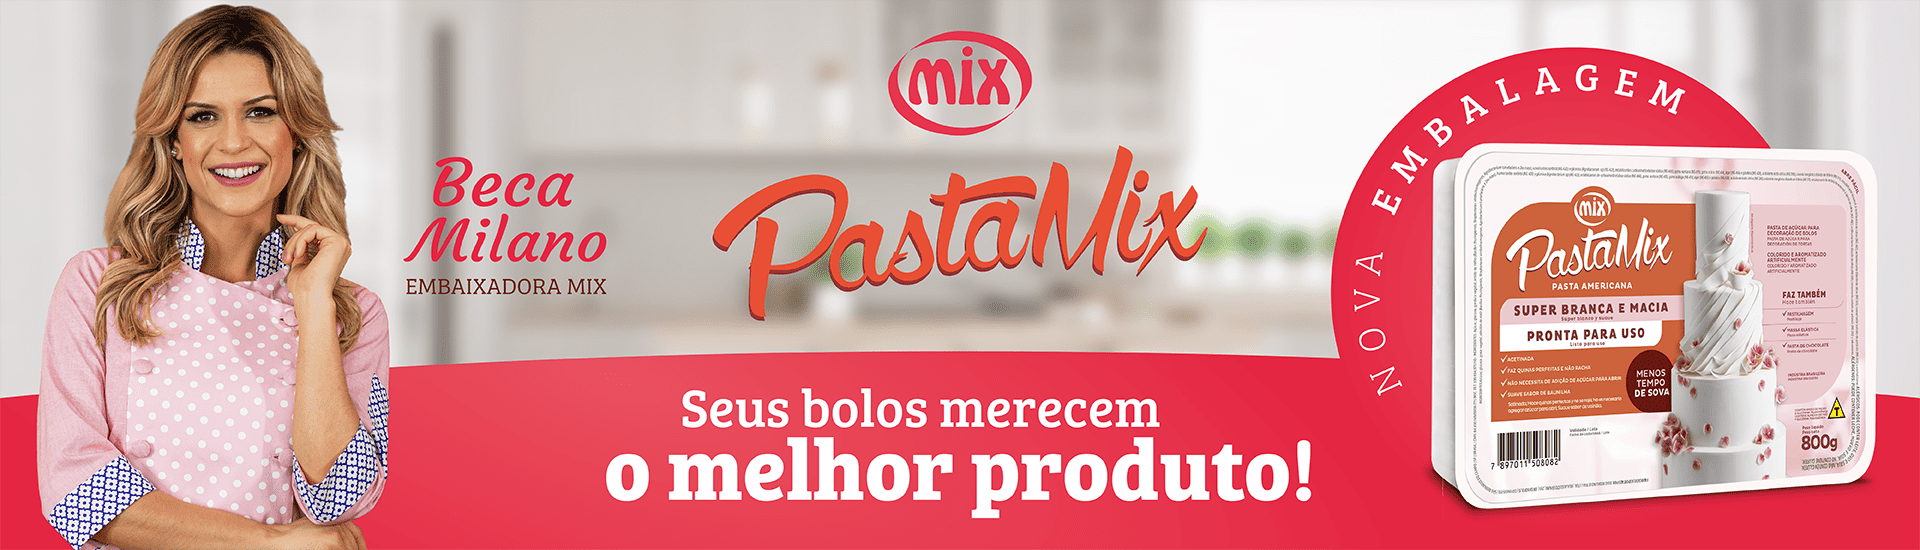 PastaMix